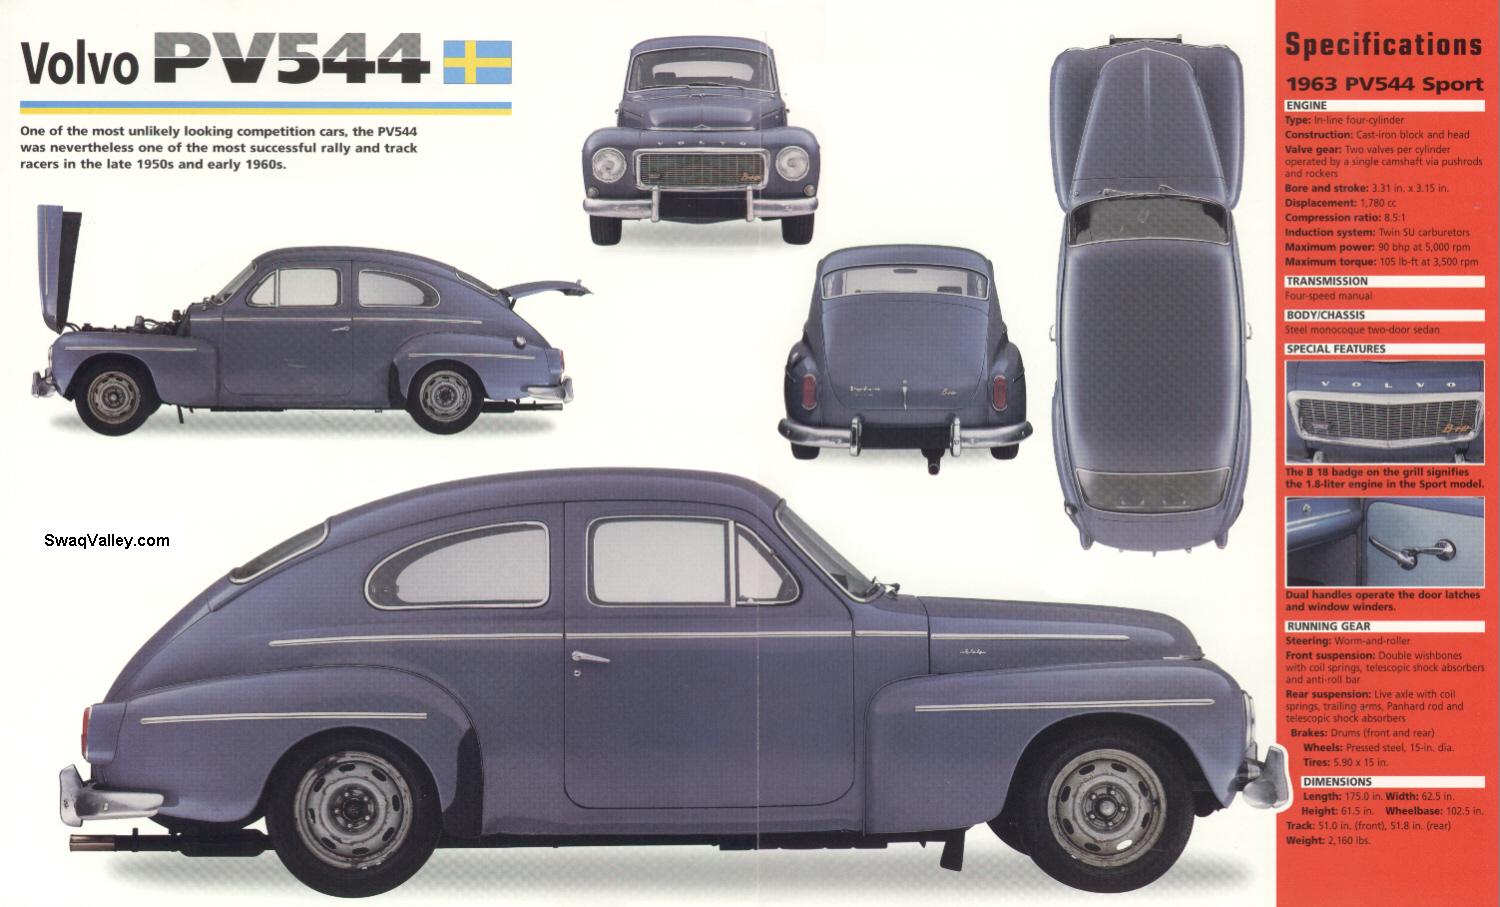 Volvo PV 544 C